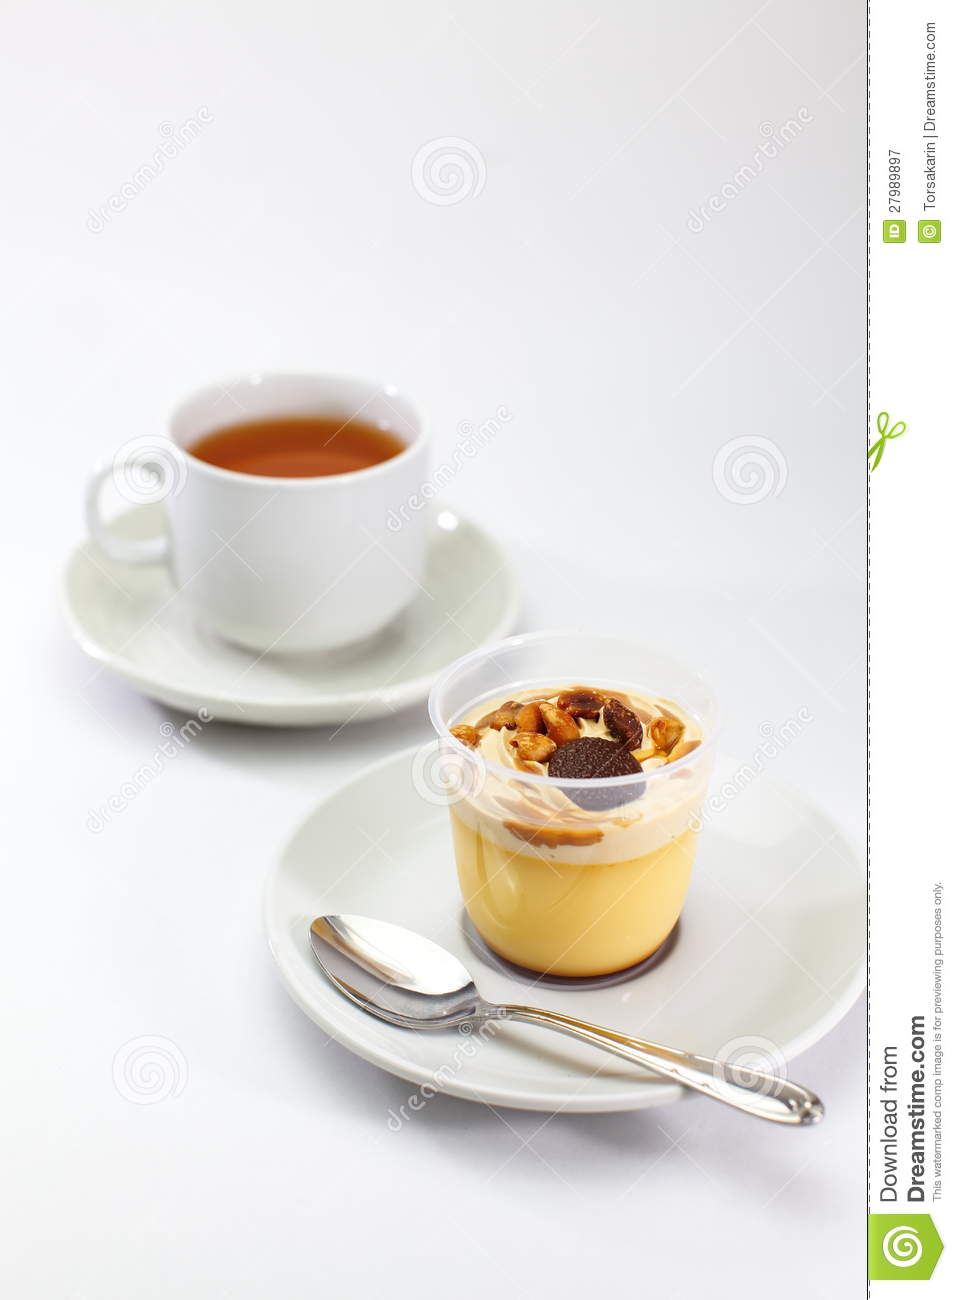 Caramel Pudding Royalty Free Stock Photography   Image  27989897